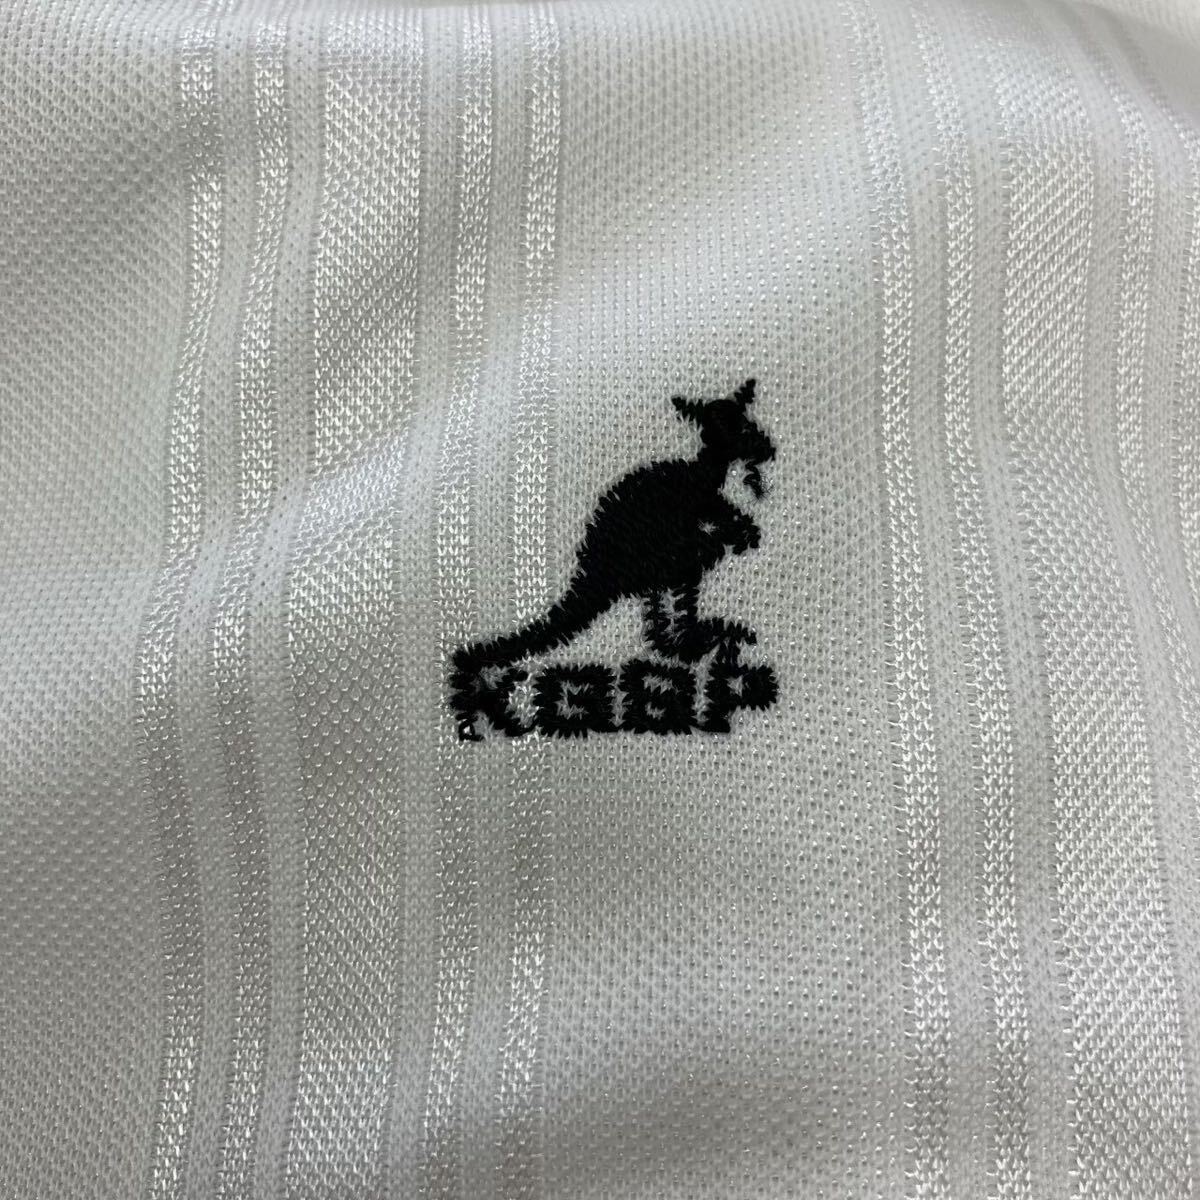 KANGOL SPORT Kangol jersey LL free shipping full Zip 